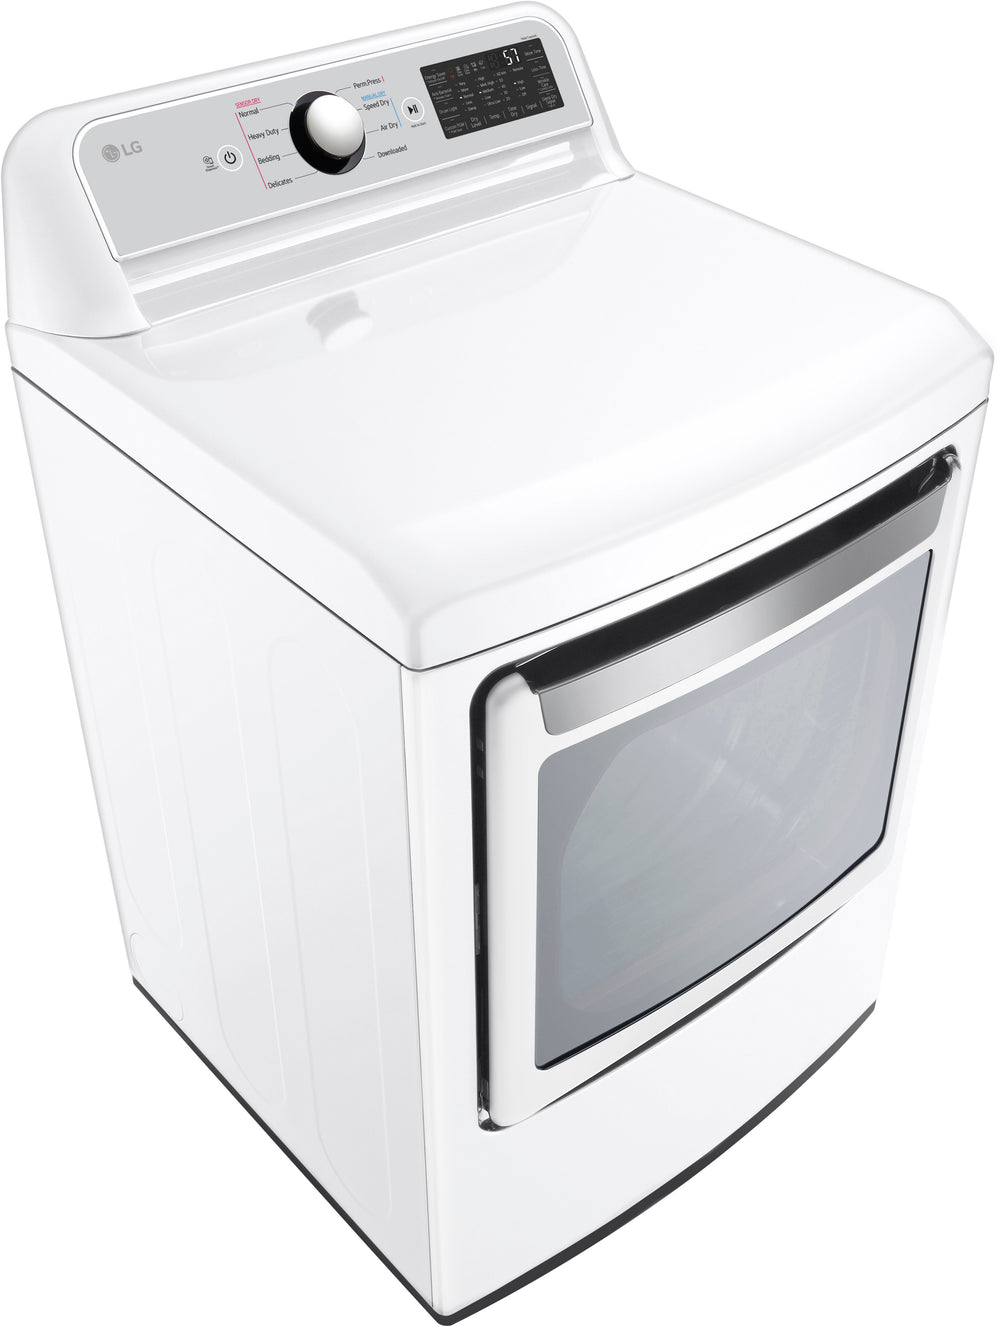 LG - 7.3 Cu. Ft. Smart Electric Dryer with EasyLoad Door - White_1